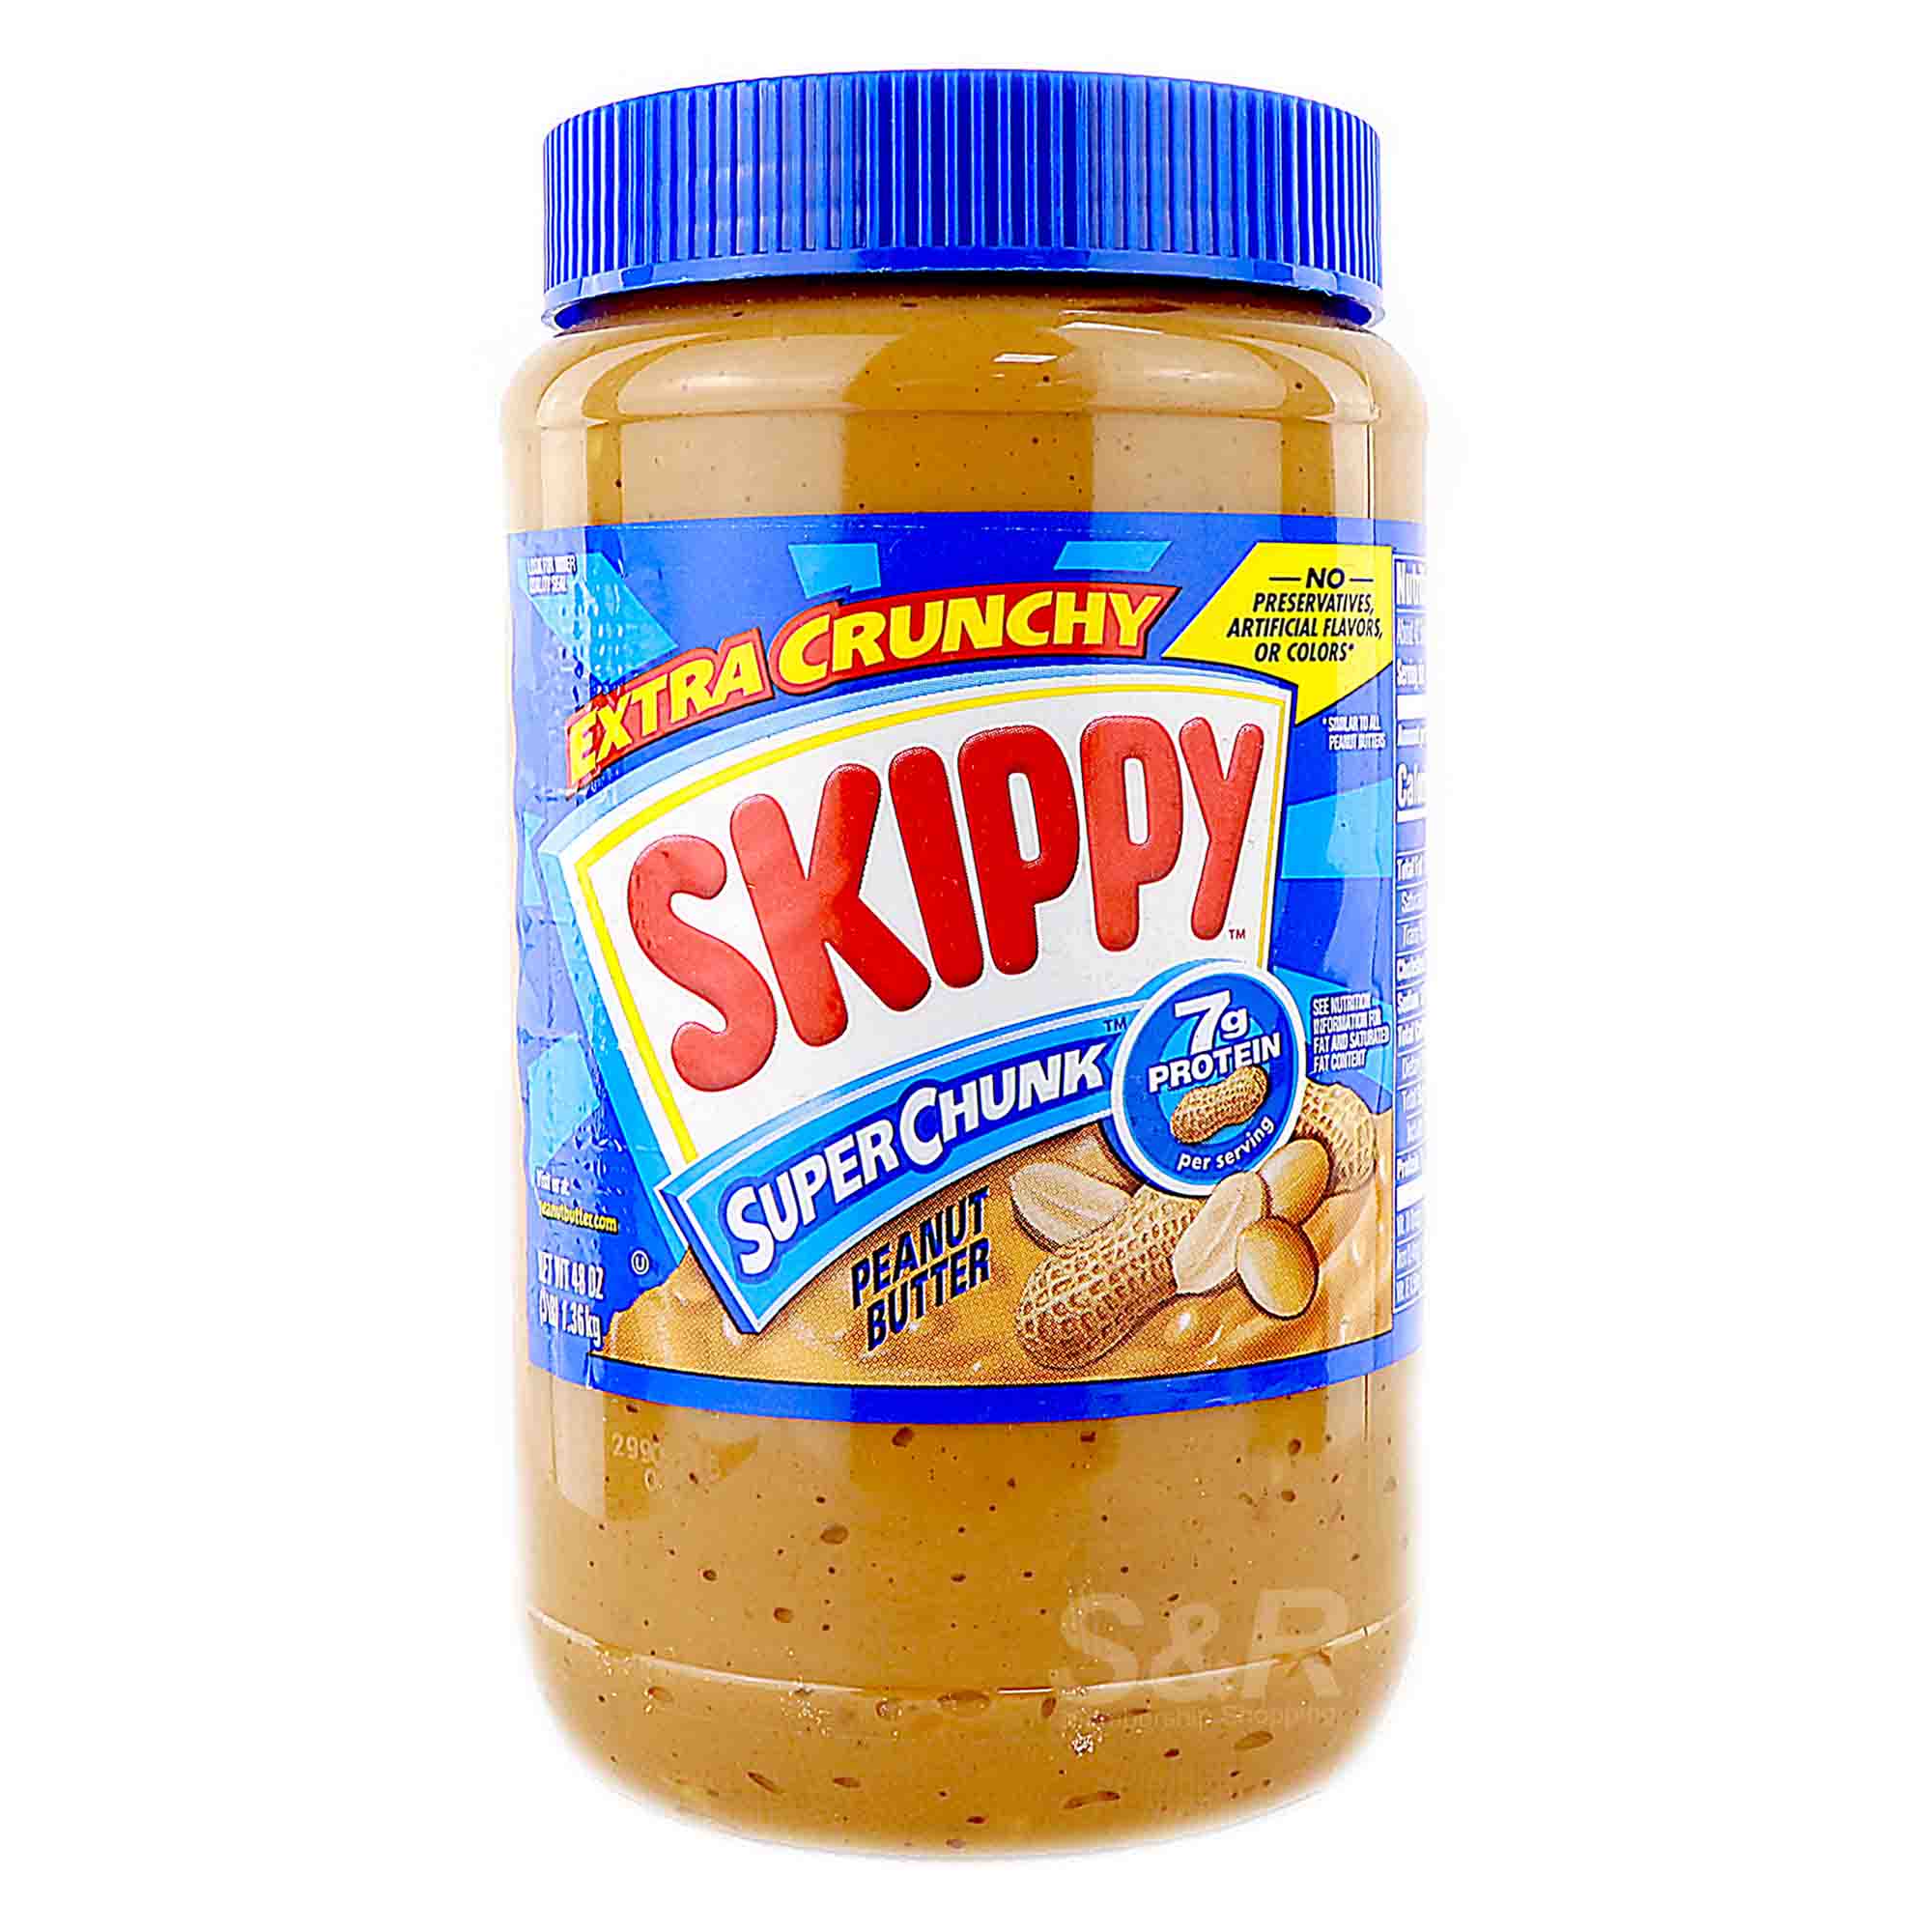 Extra Crunchy Skippy Super Chunk Peanut Butter 1.36kg